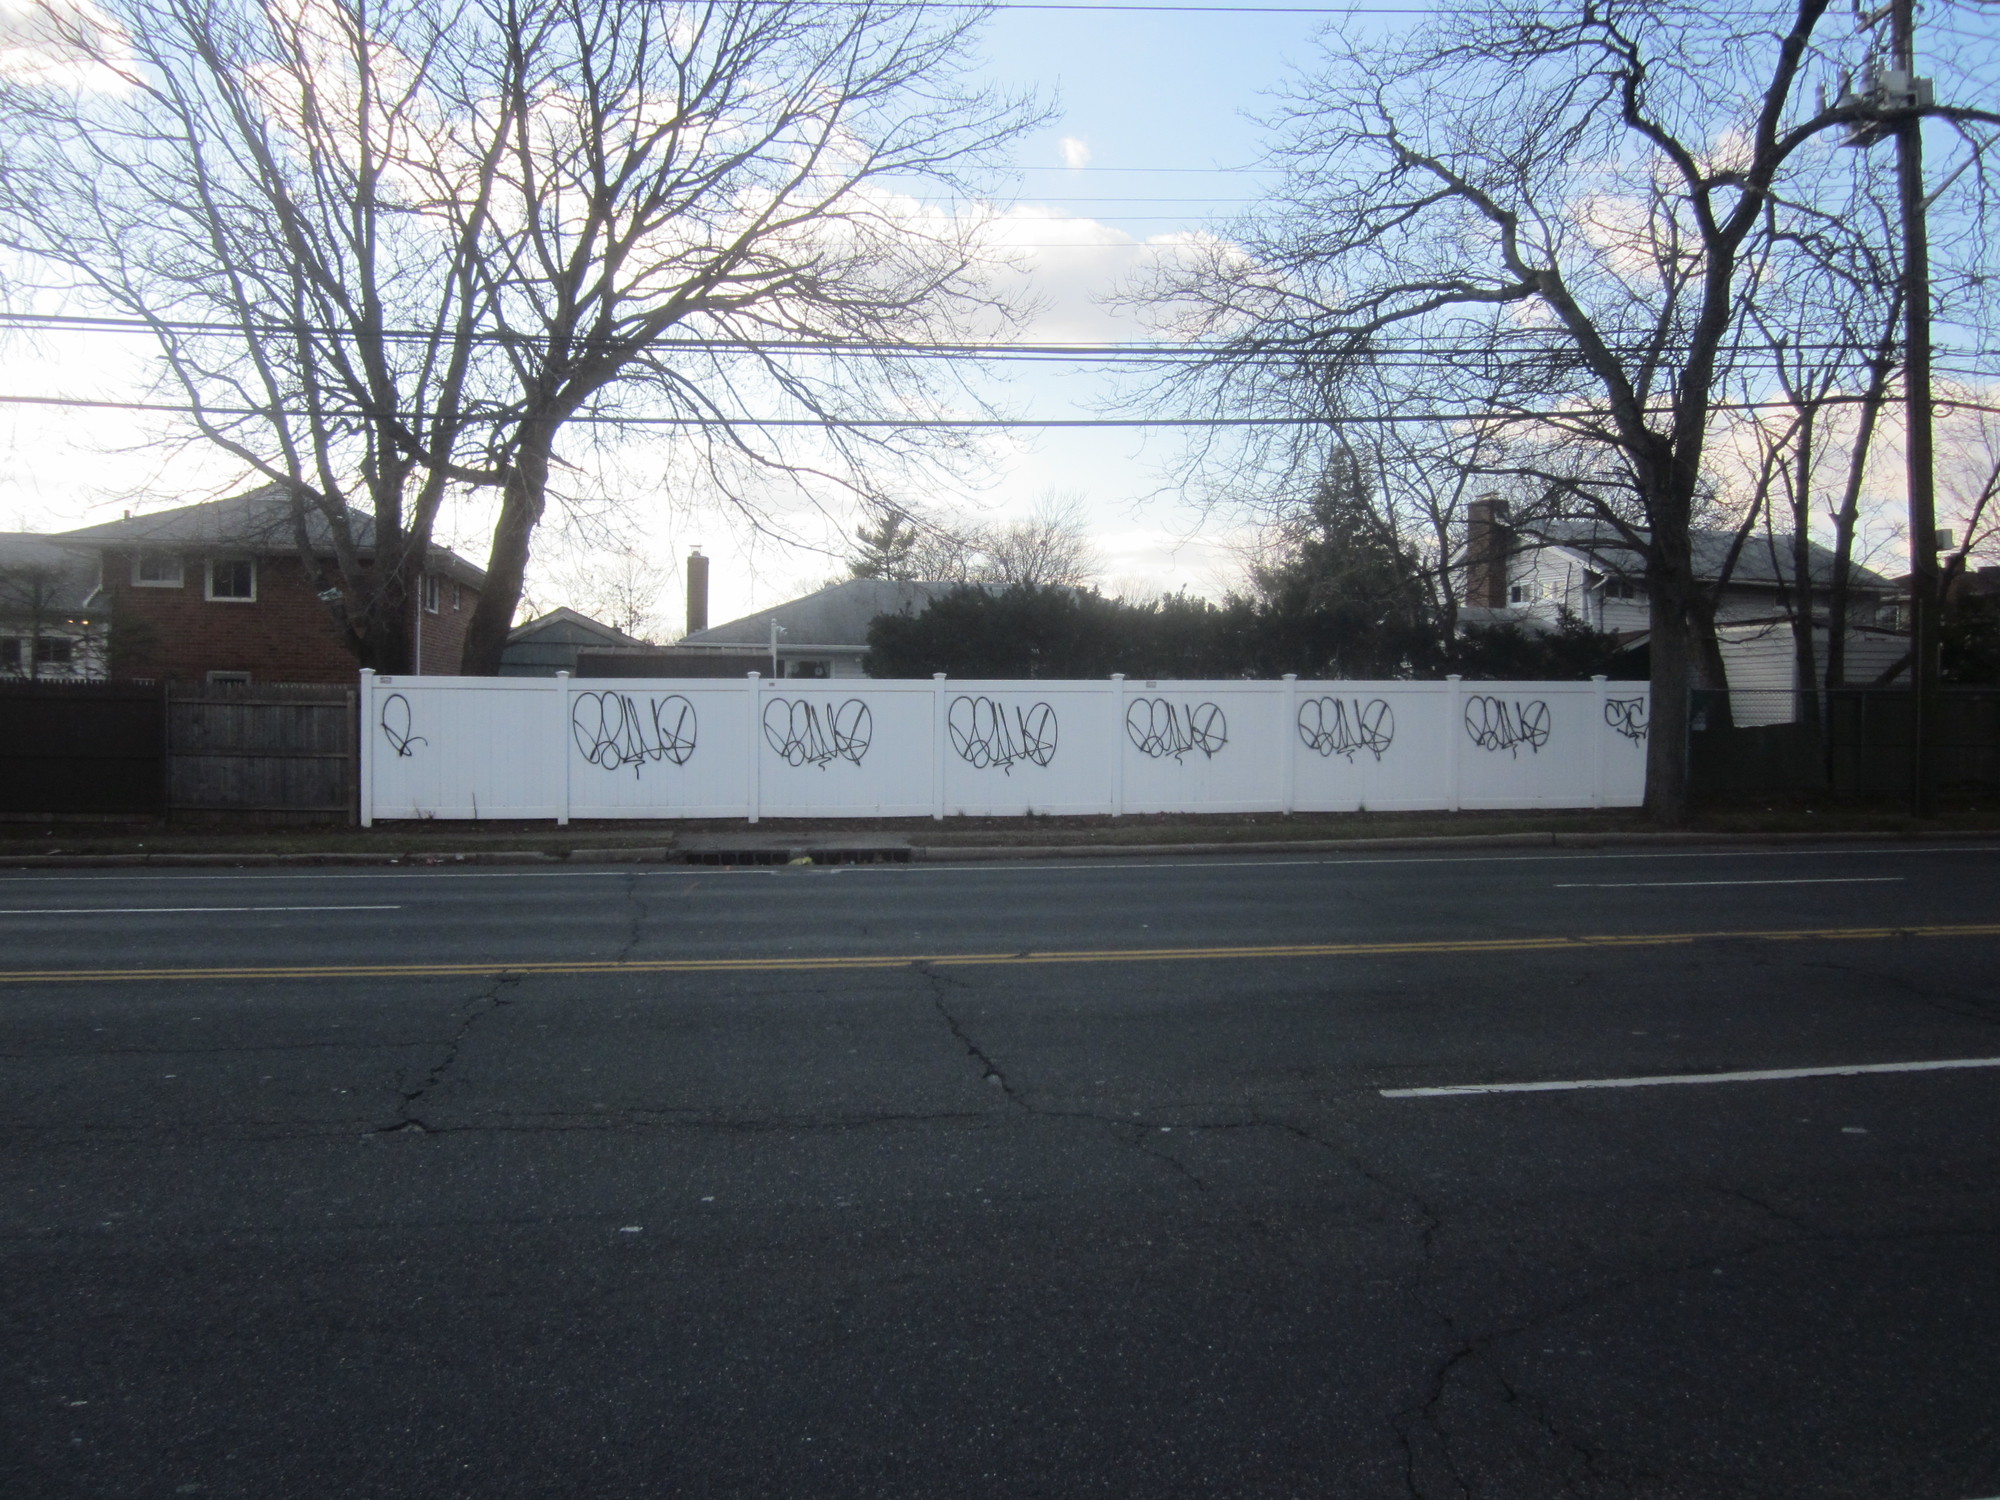 The graffiti has created an eyesore on Merrick Avenue.